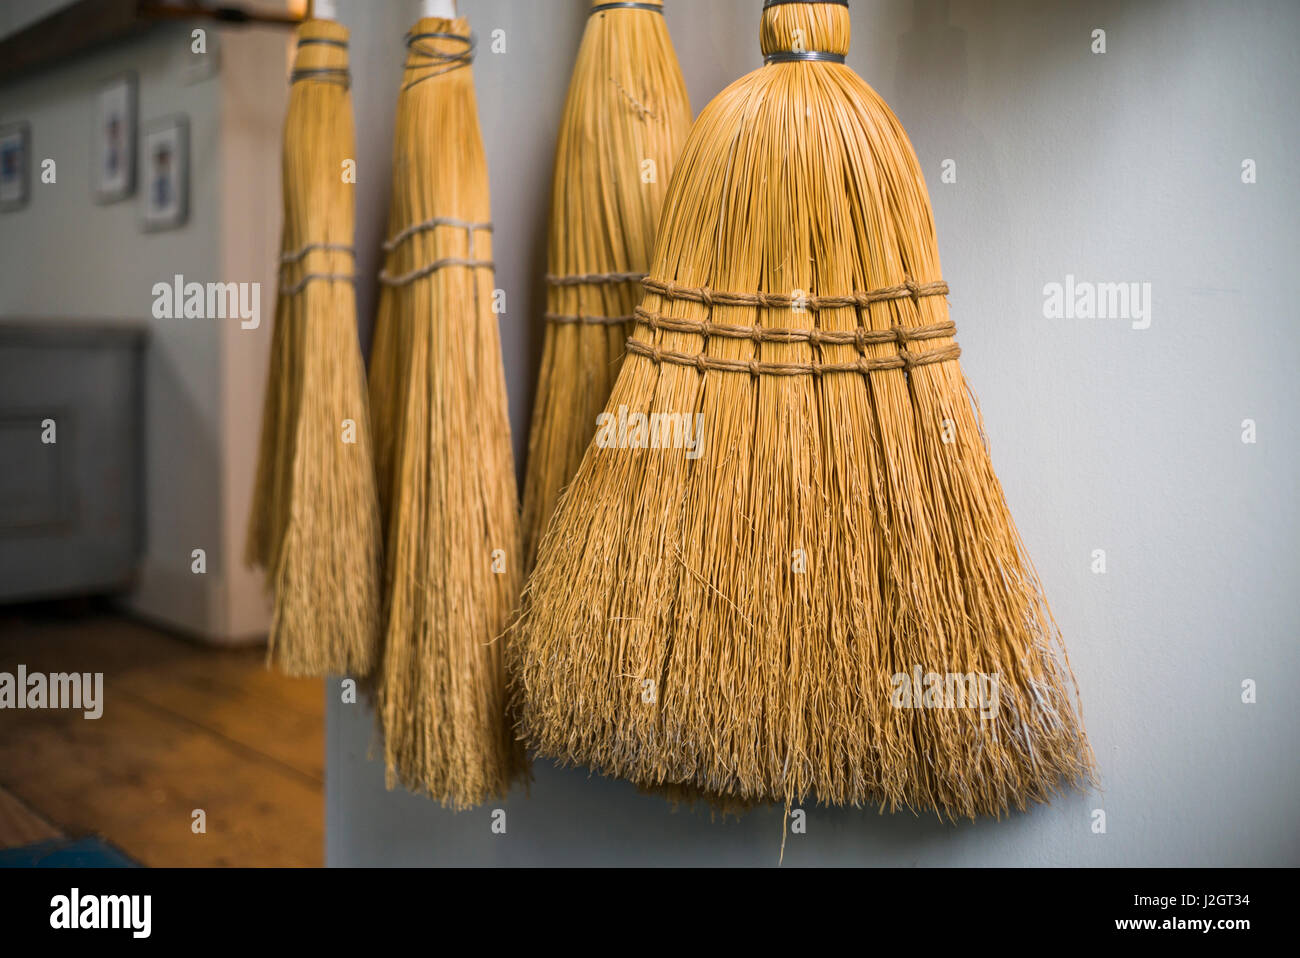 USA, New Hampshire, Enfield Shaker Museum, Shaker brooms Stock Photo